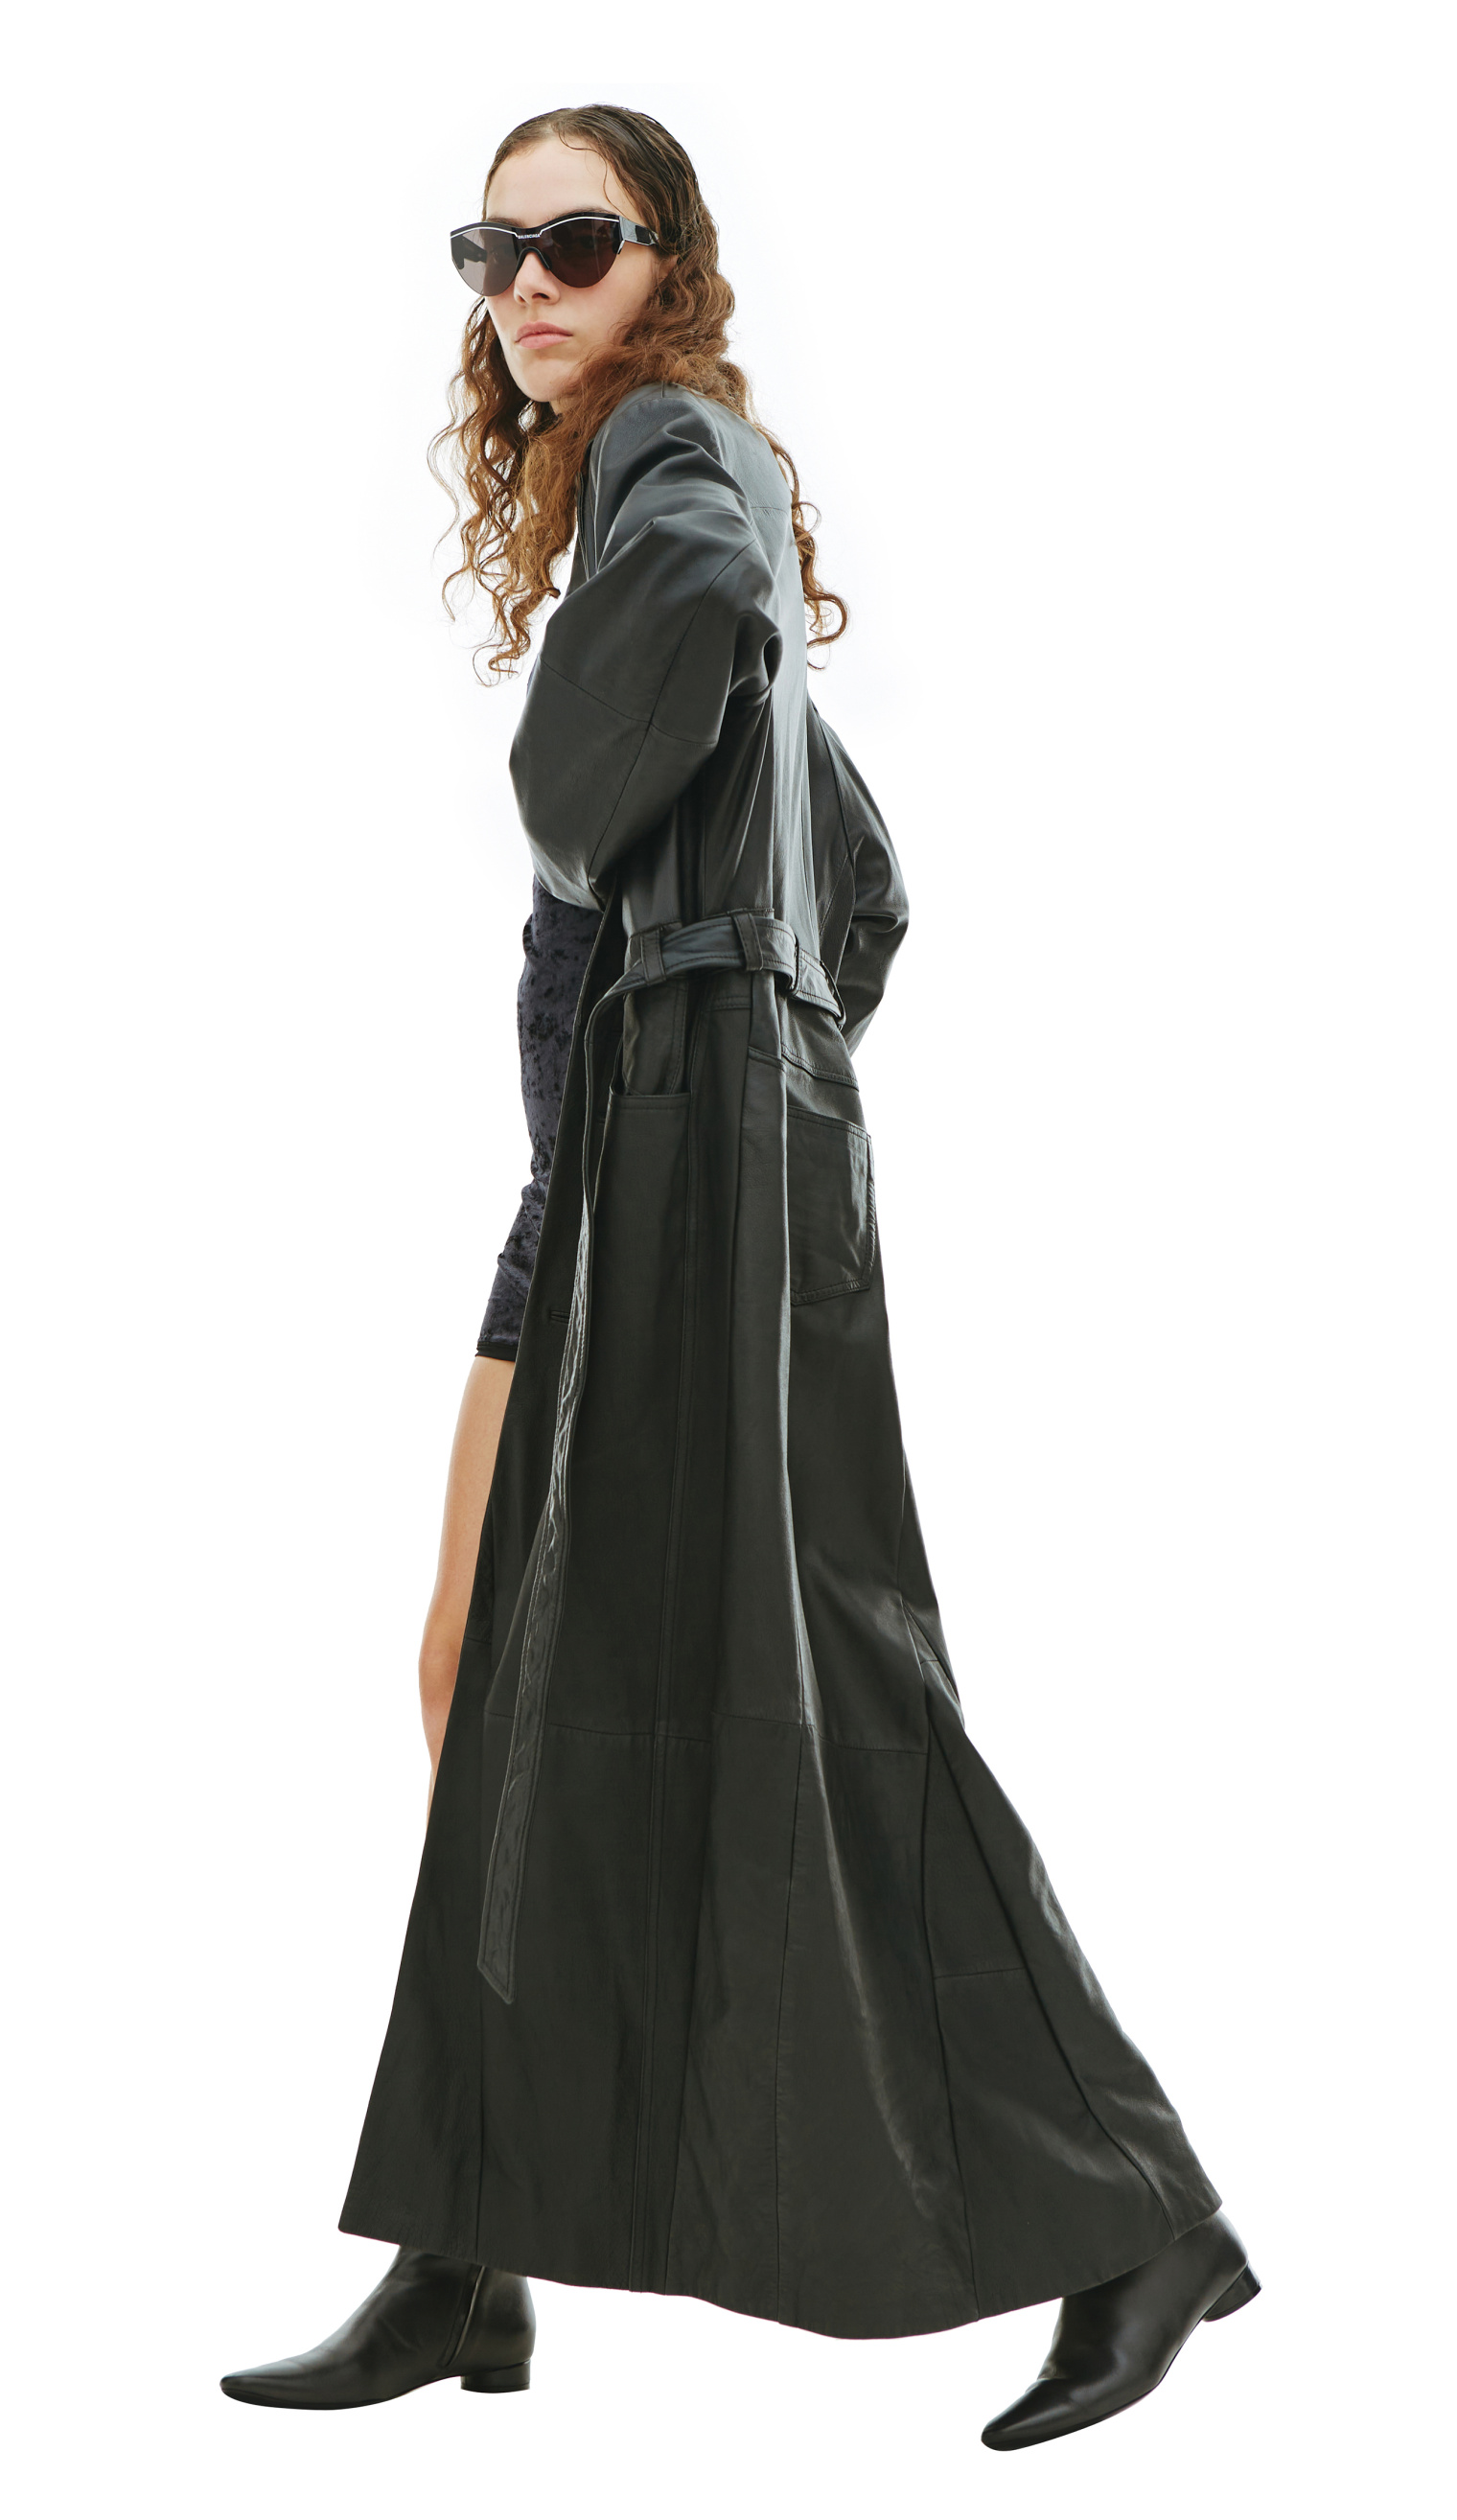 Buy Balenciaga women black long leather coat for $6,050 online on 